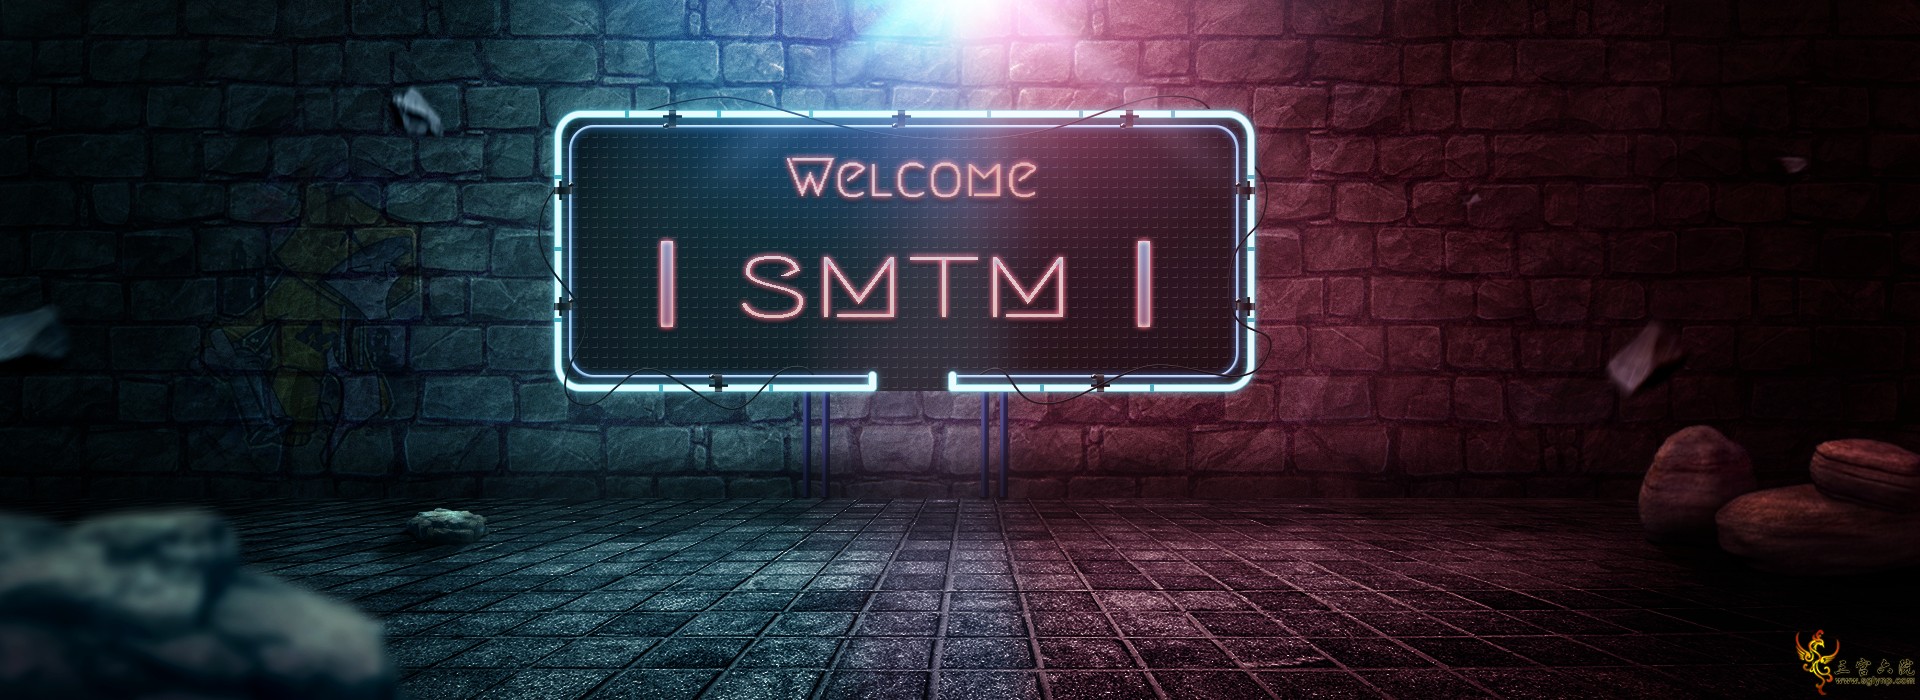 Welcome SMTM.png